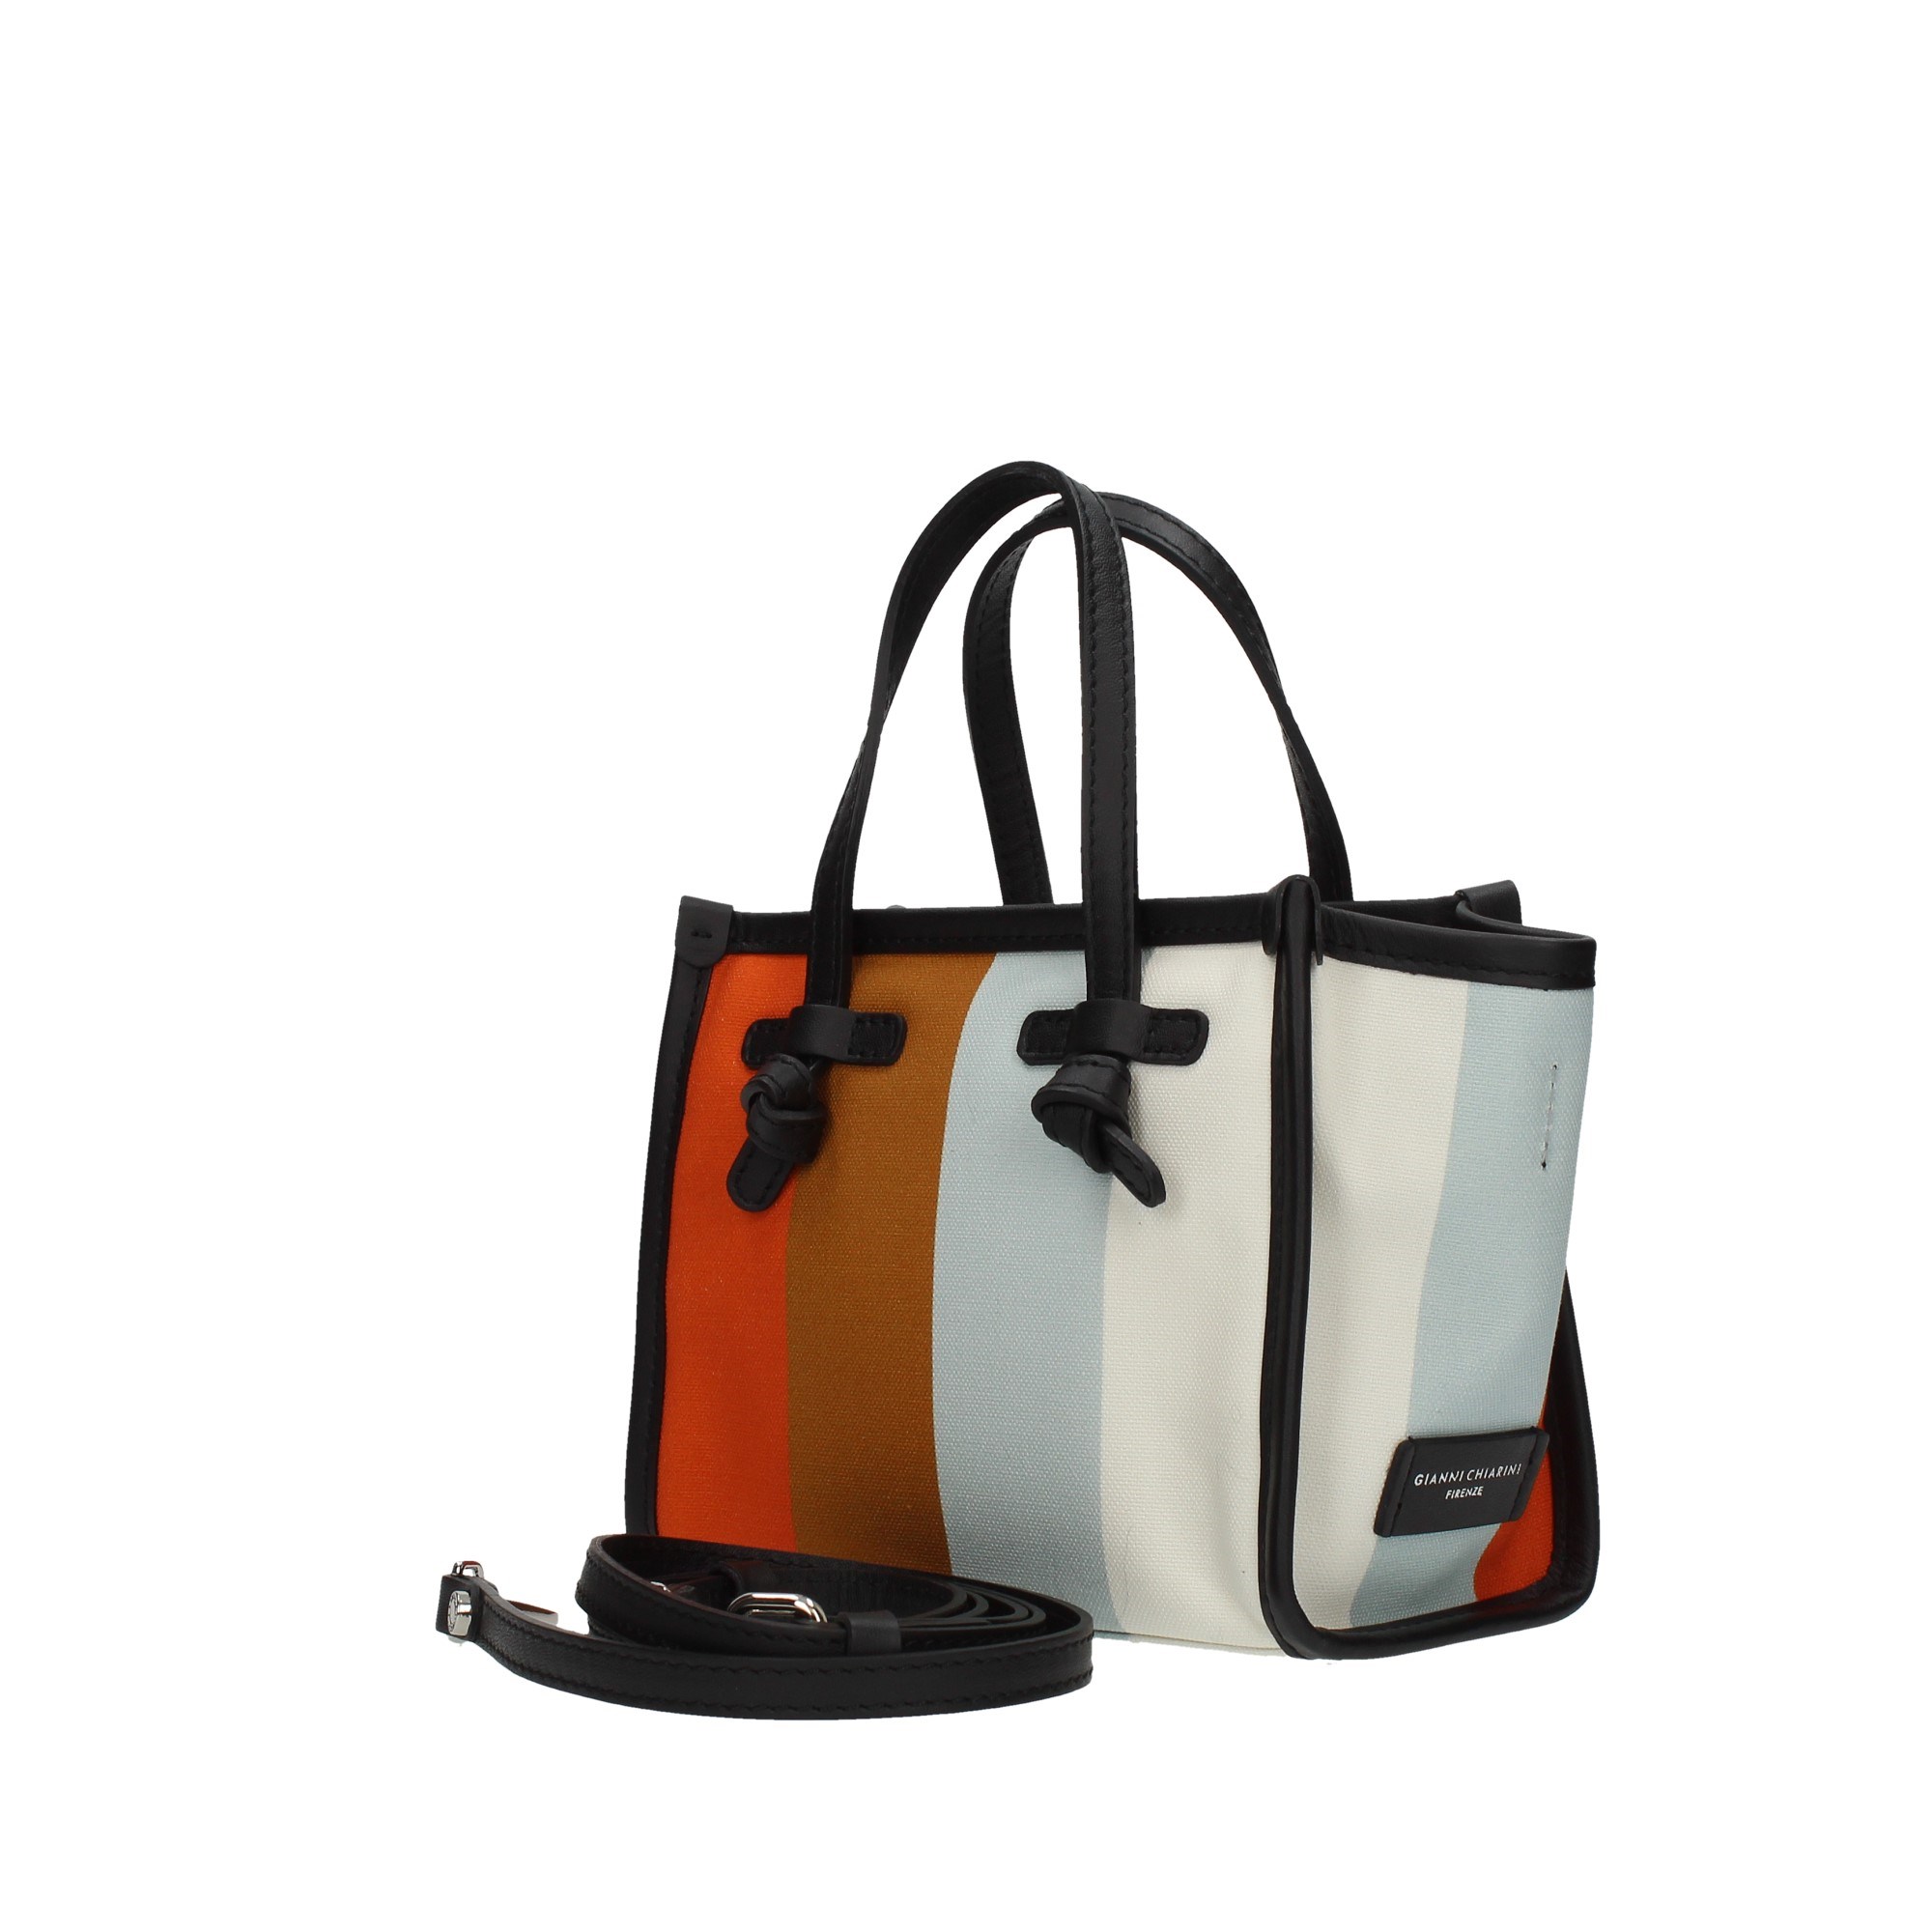 Marcella Club Gianni Chiarini Accessories Women Shoulder Bags Heavenly BS8065/21PE SUM-STRI